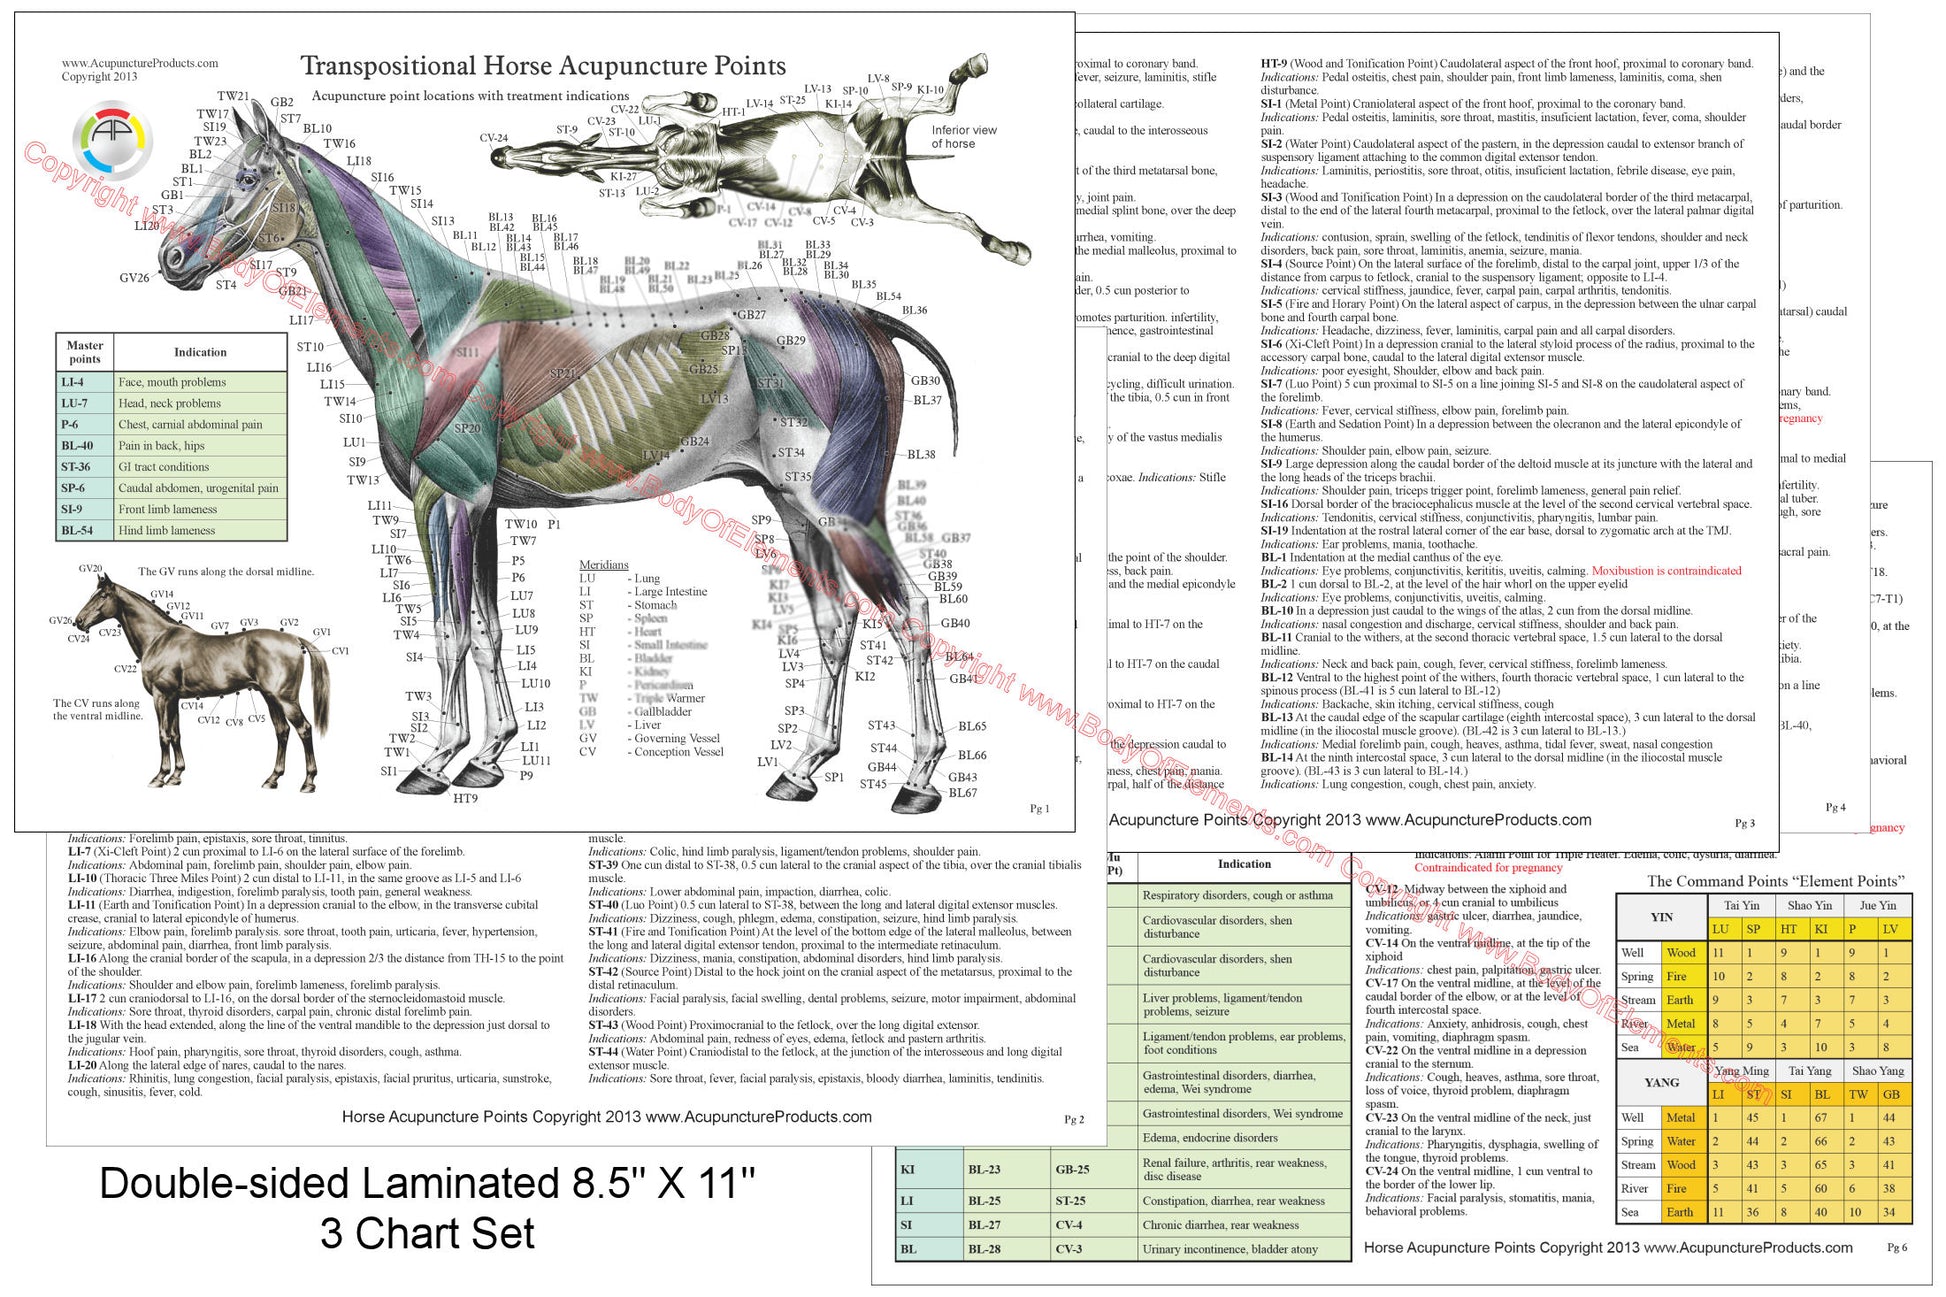 Horse acupuncture points chart set